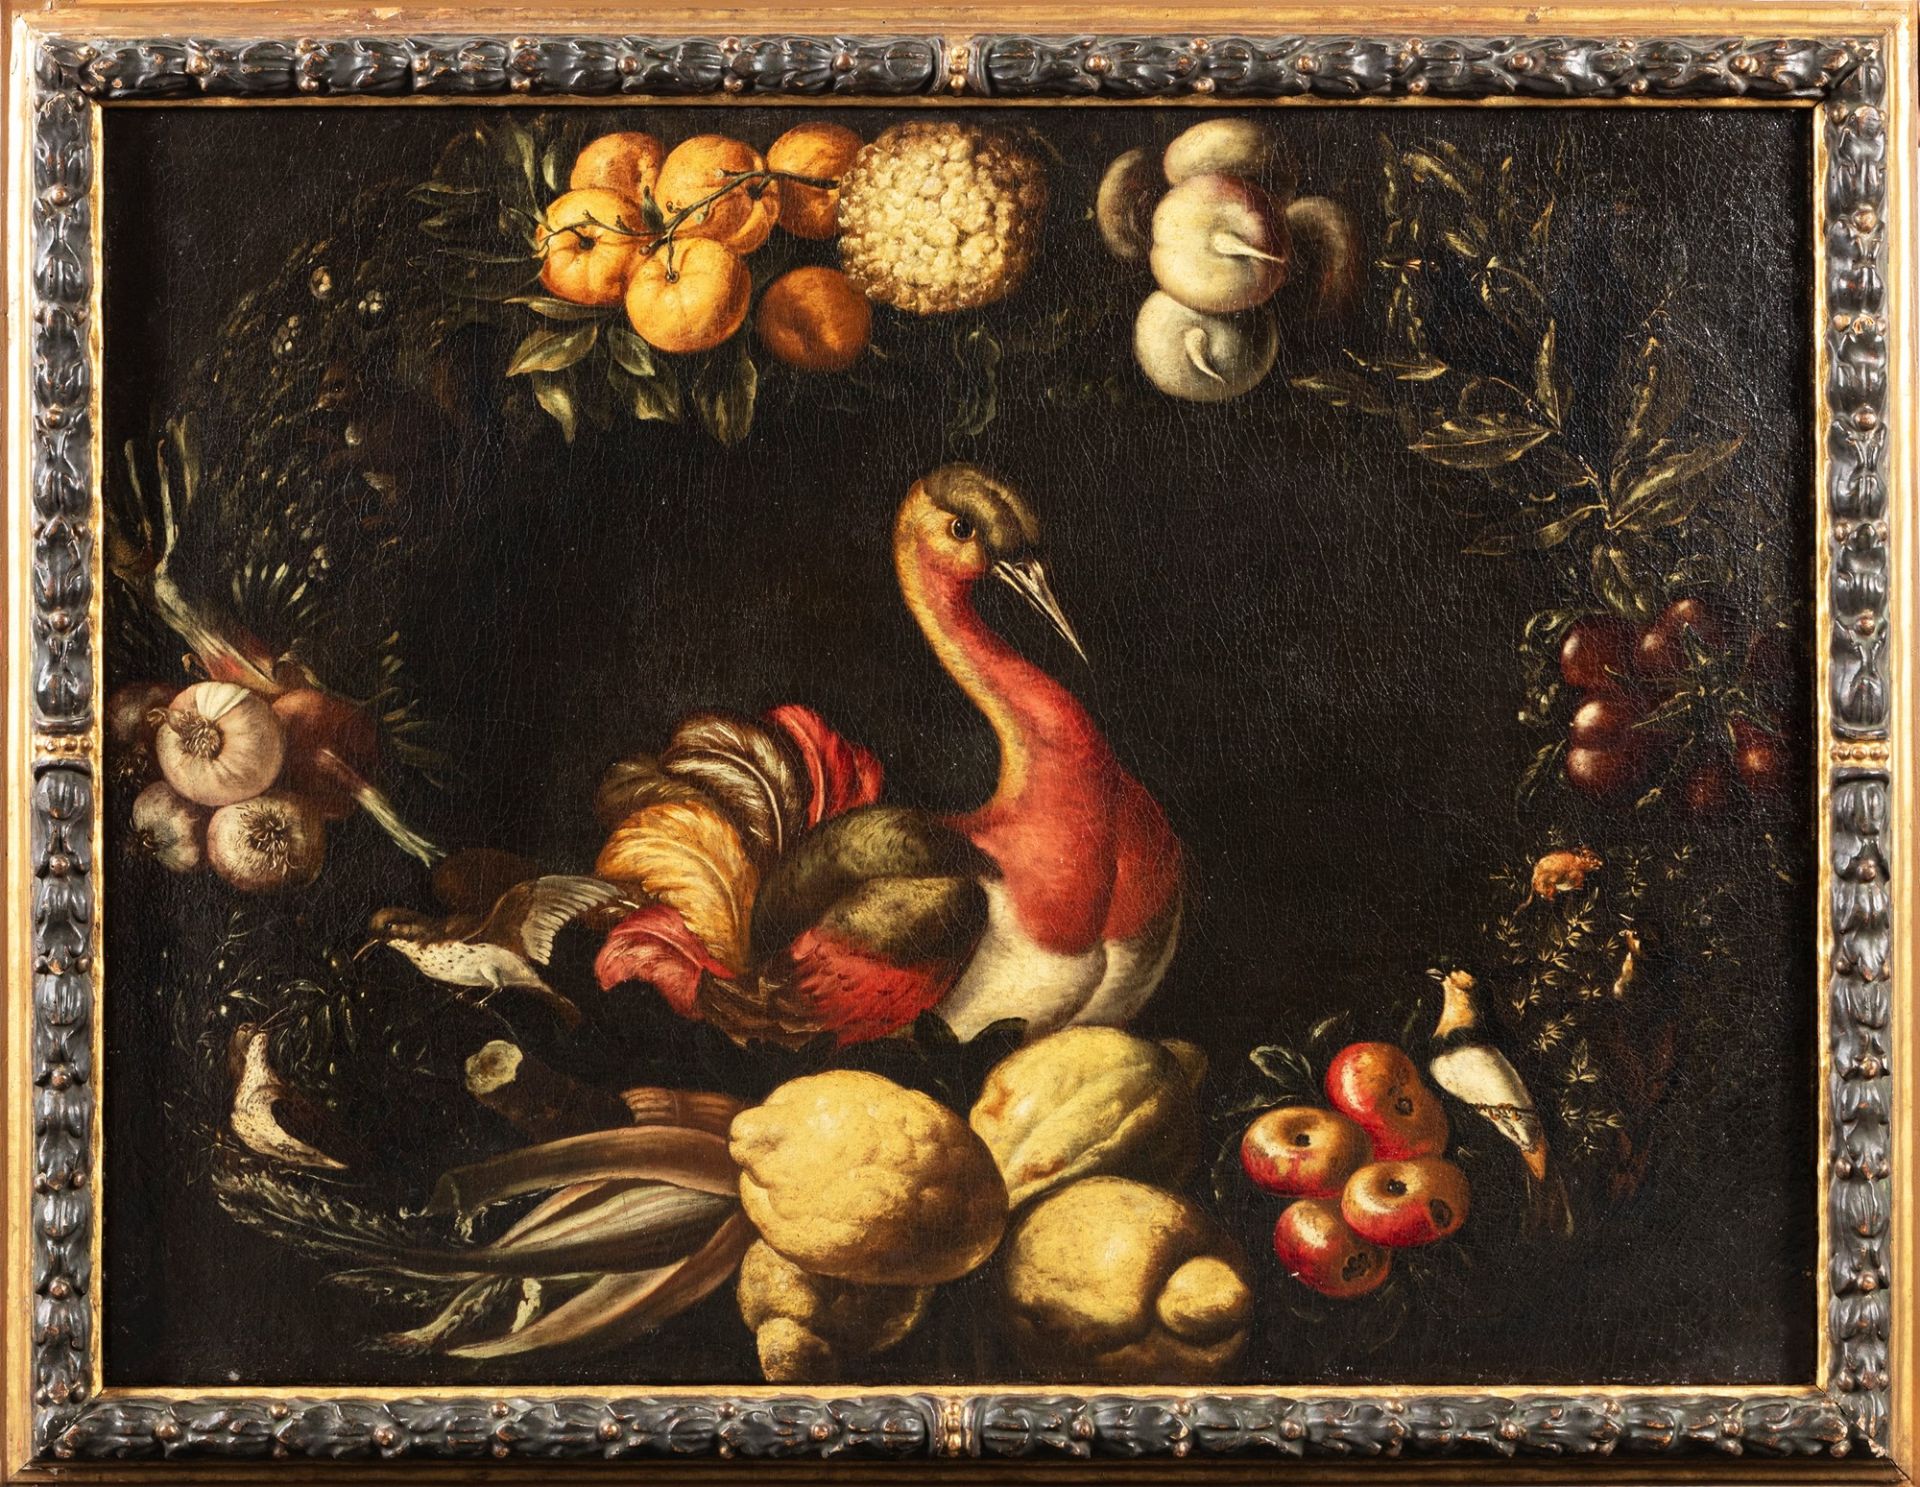 Neapolitan school, XVII century - Garland of fruit and vegetables with birds - Image 2 of 7